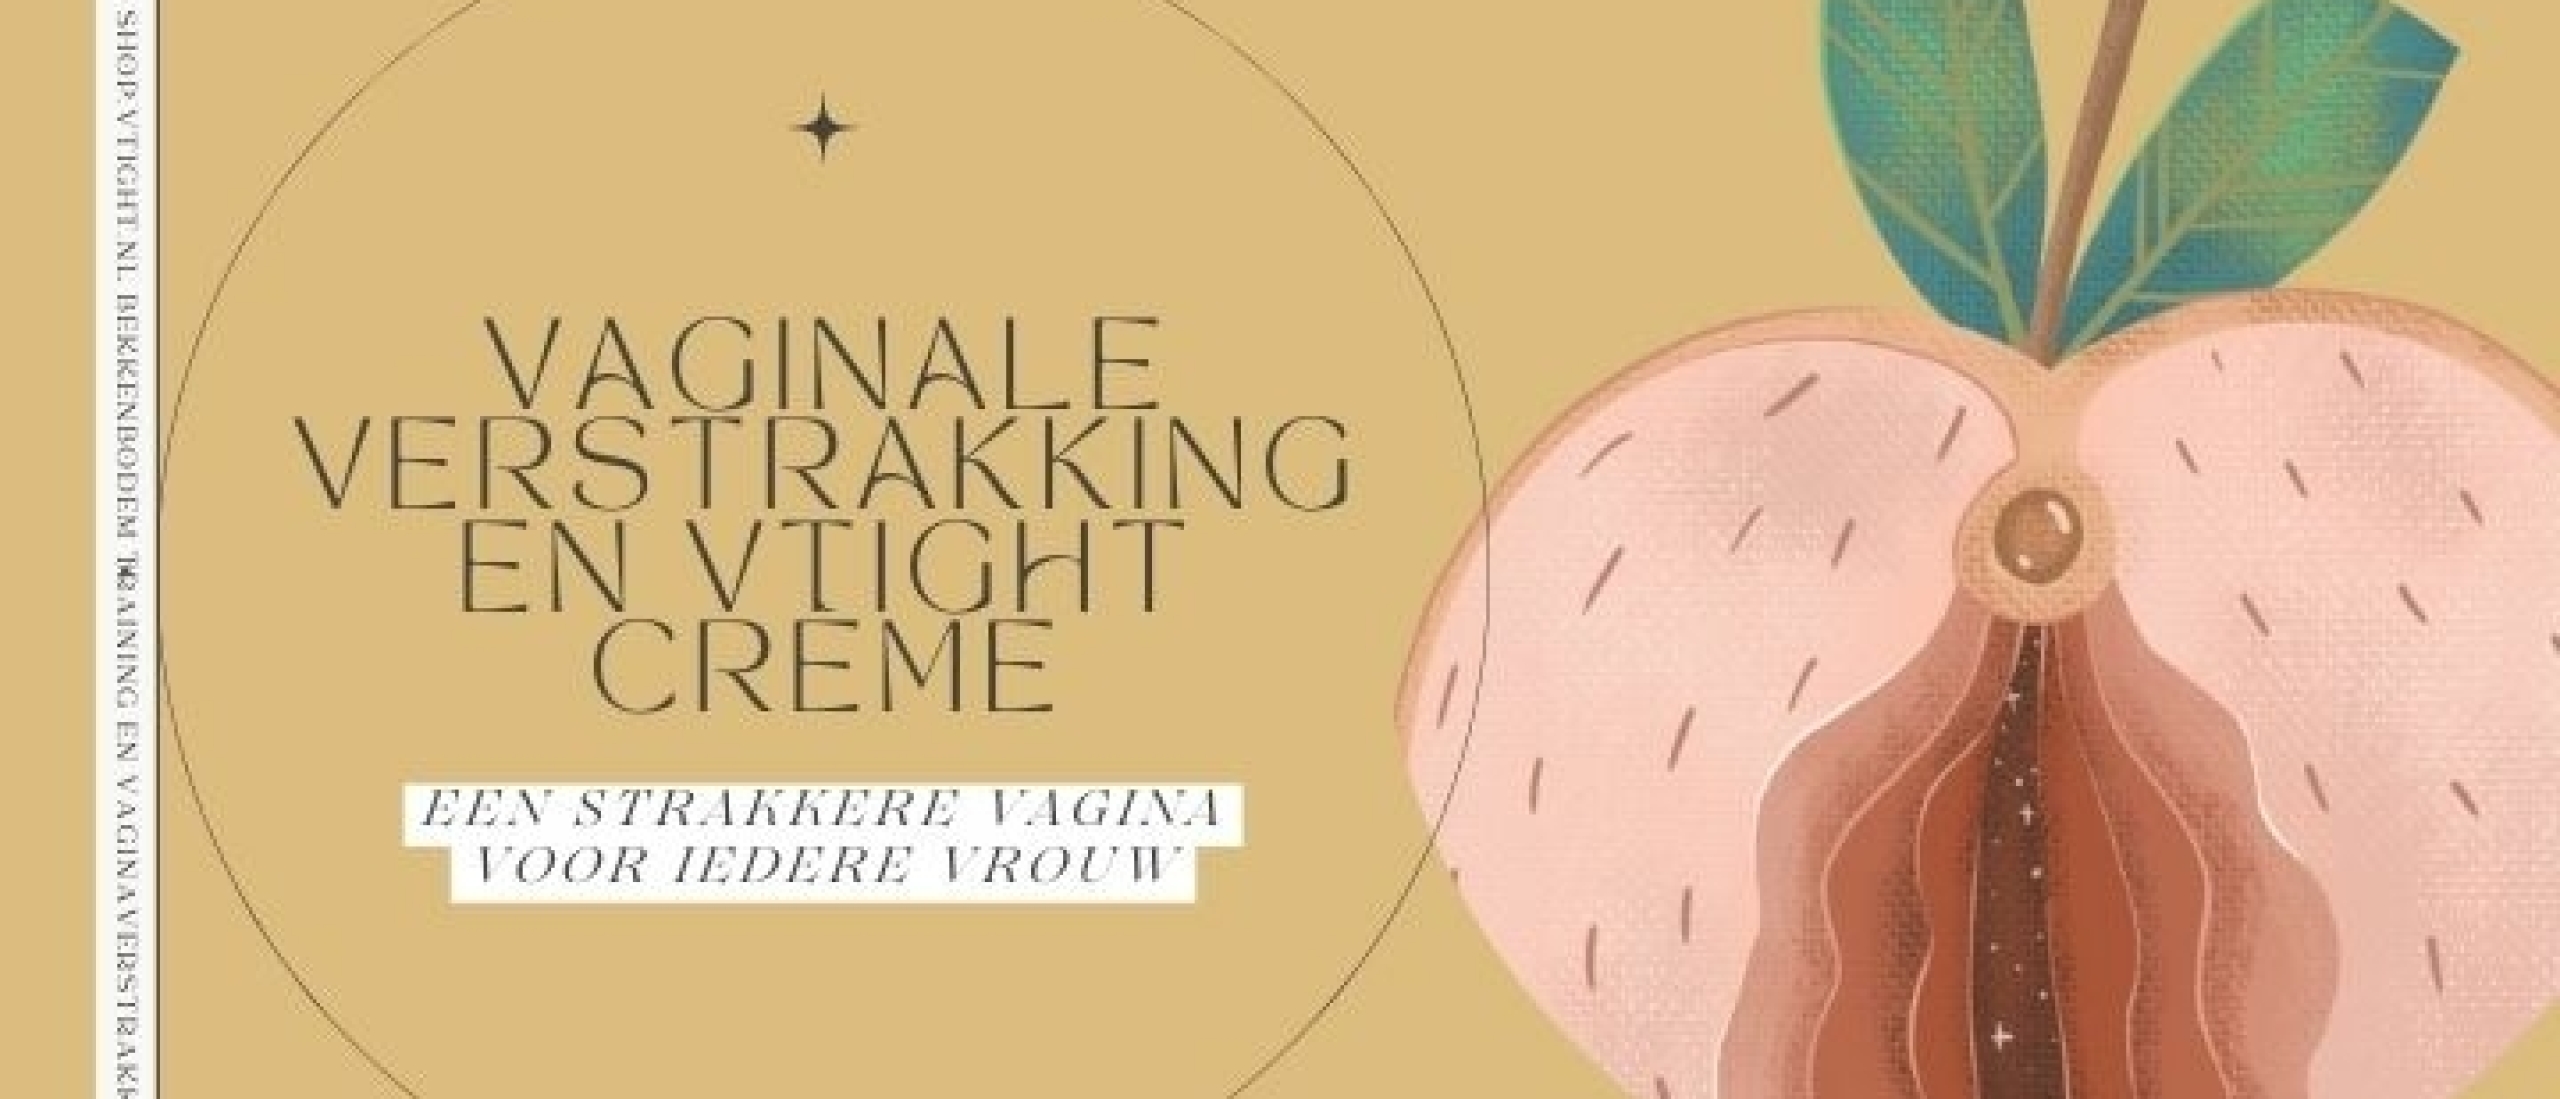 vaginale verstrakking en vtight crème